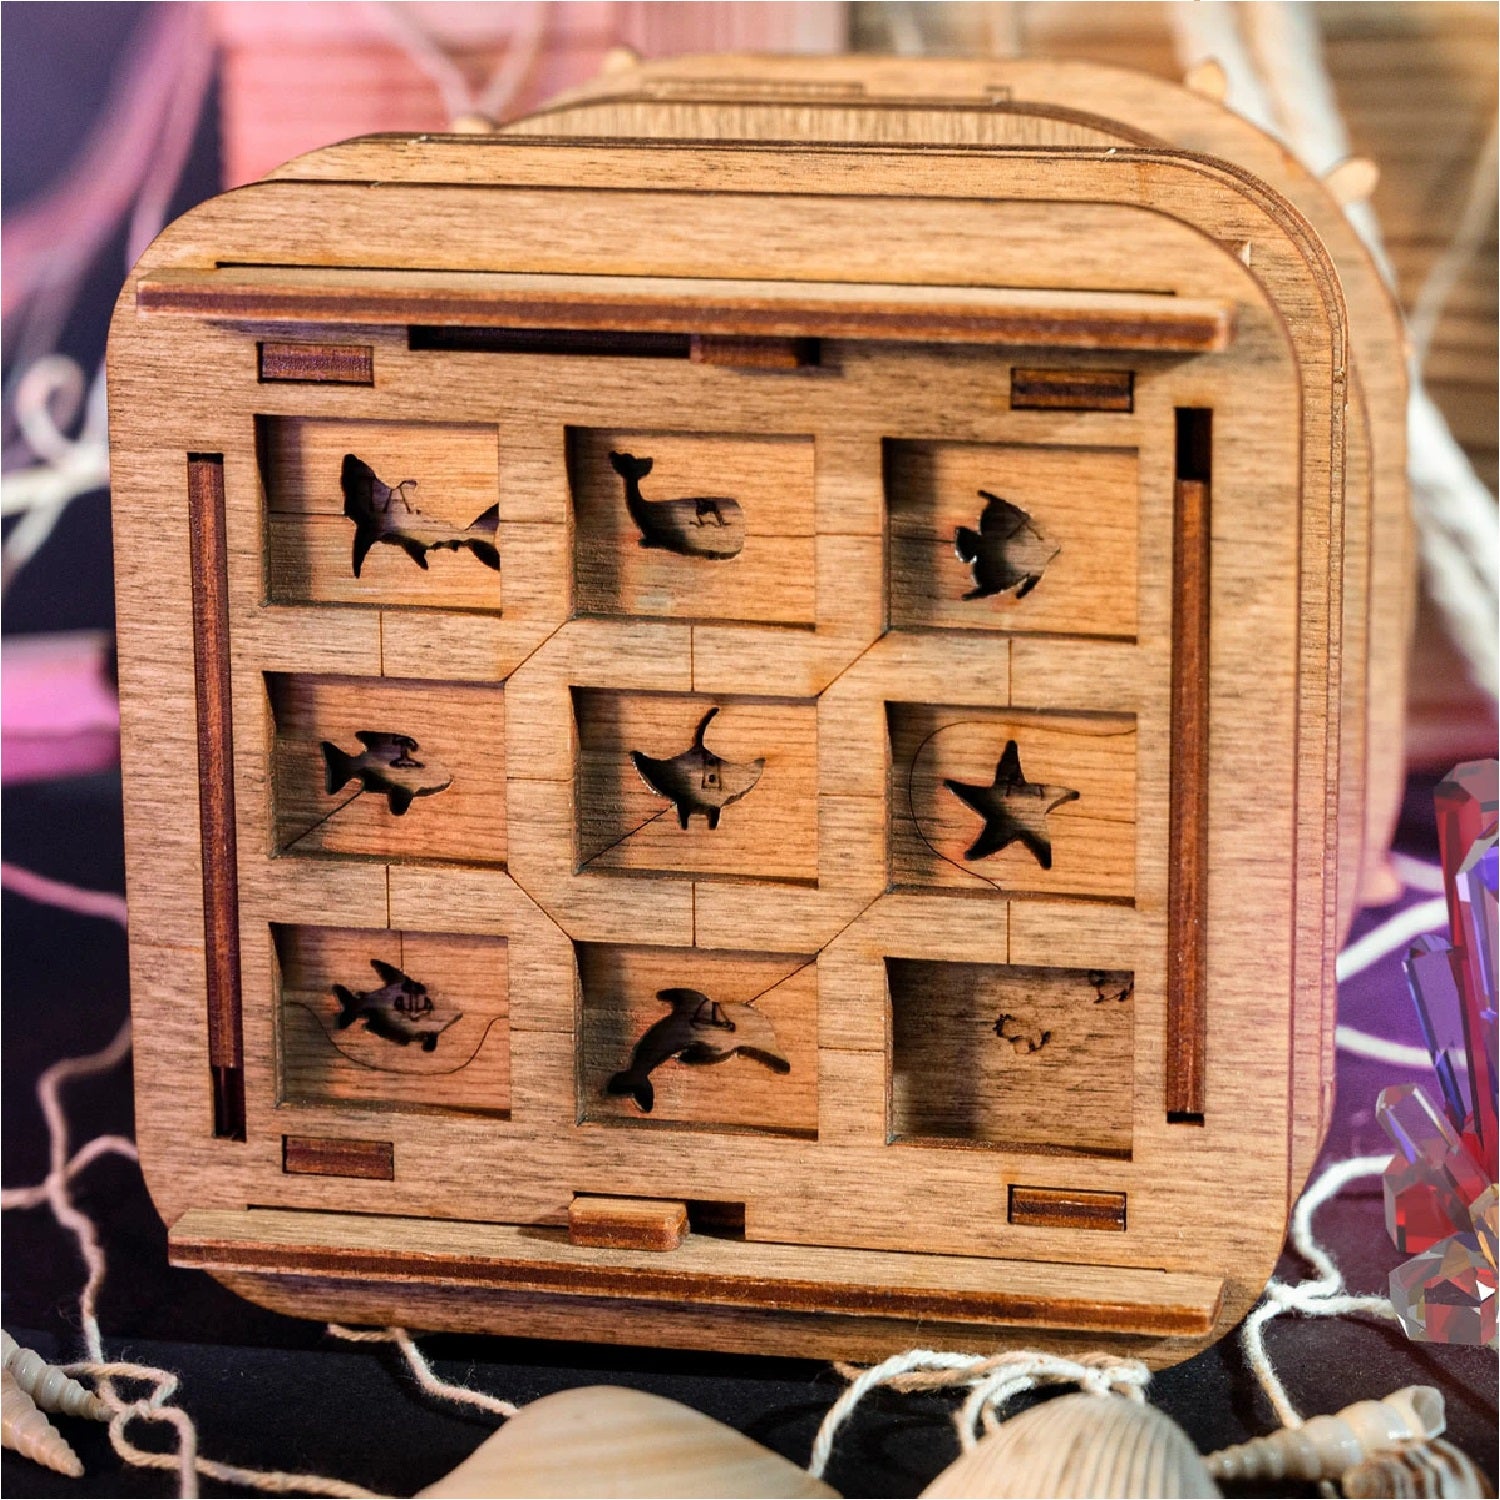 Cluebox "Davy Jones" Escape Room Game-iDventure--.